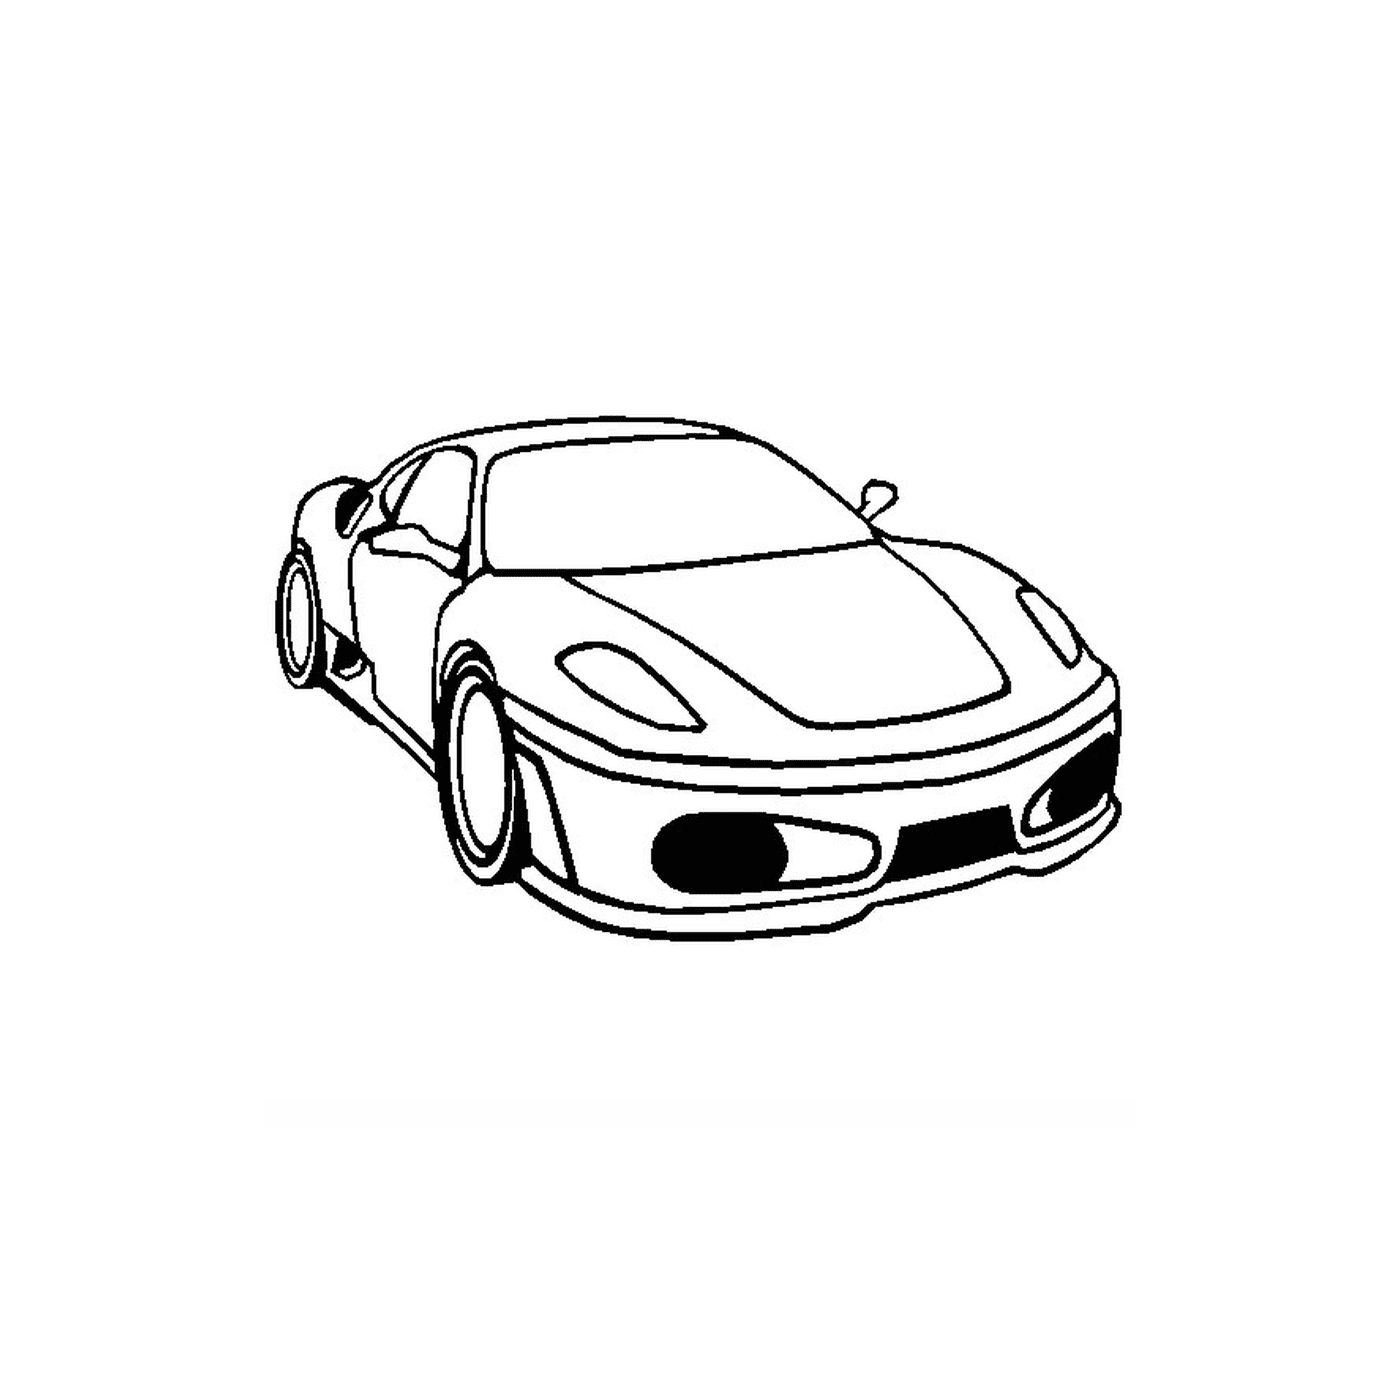  Ferrari Auto f430 